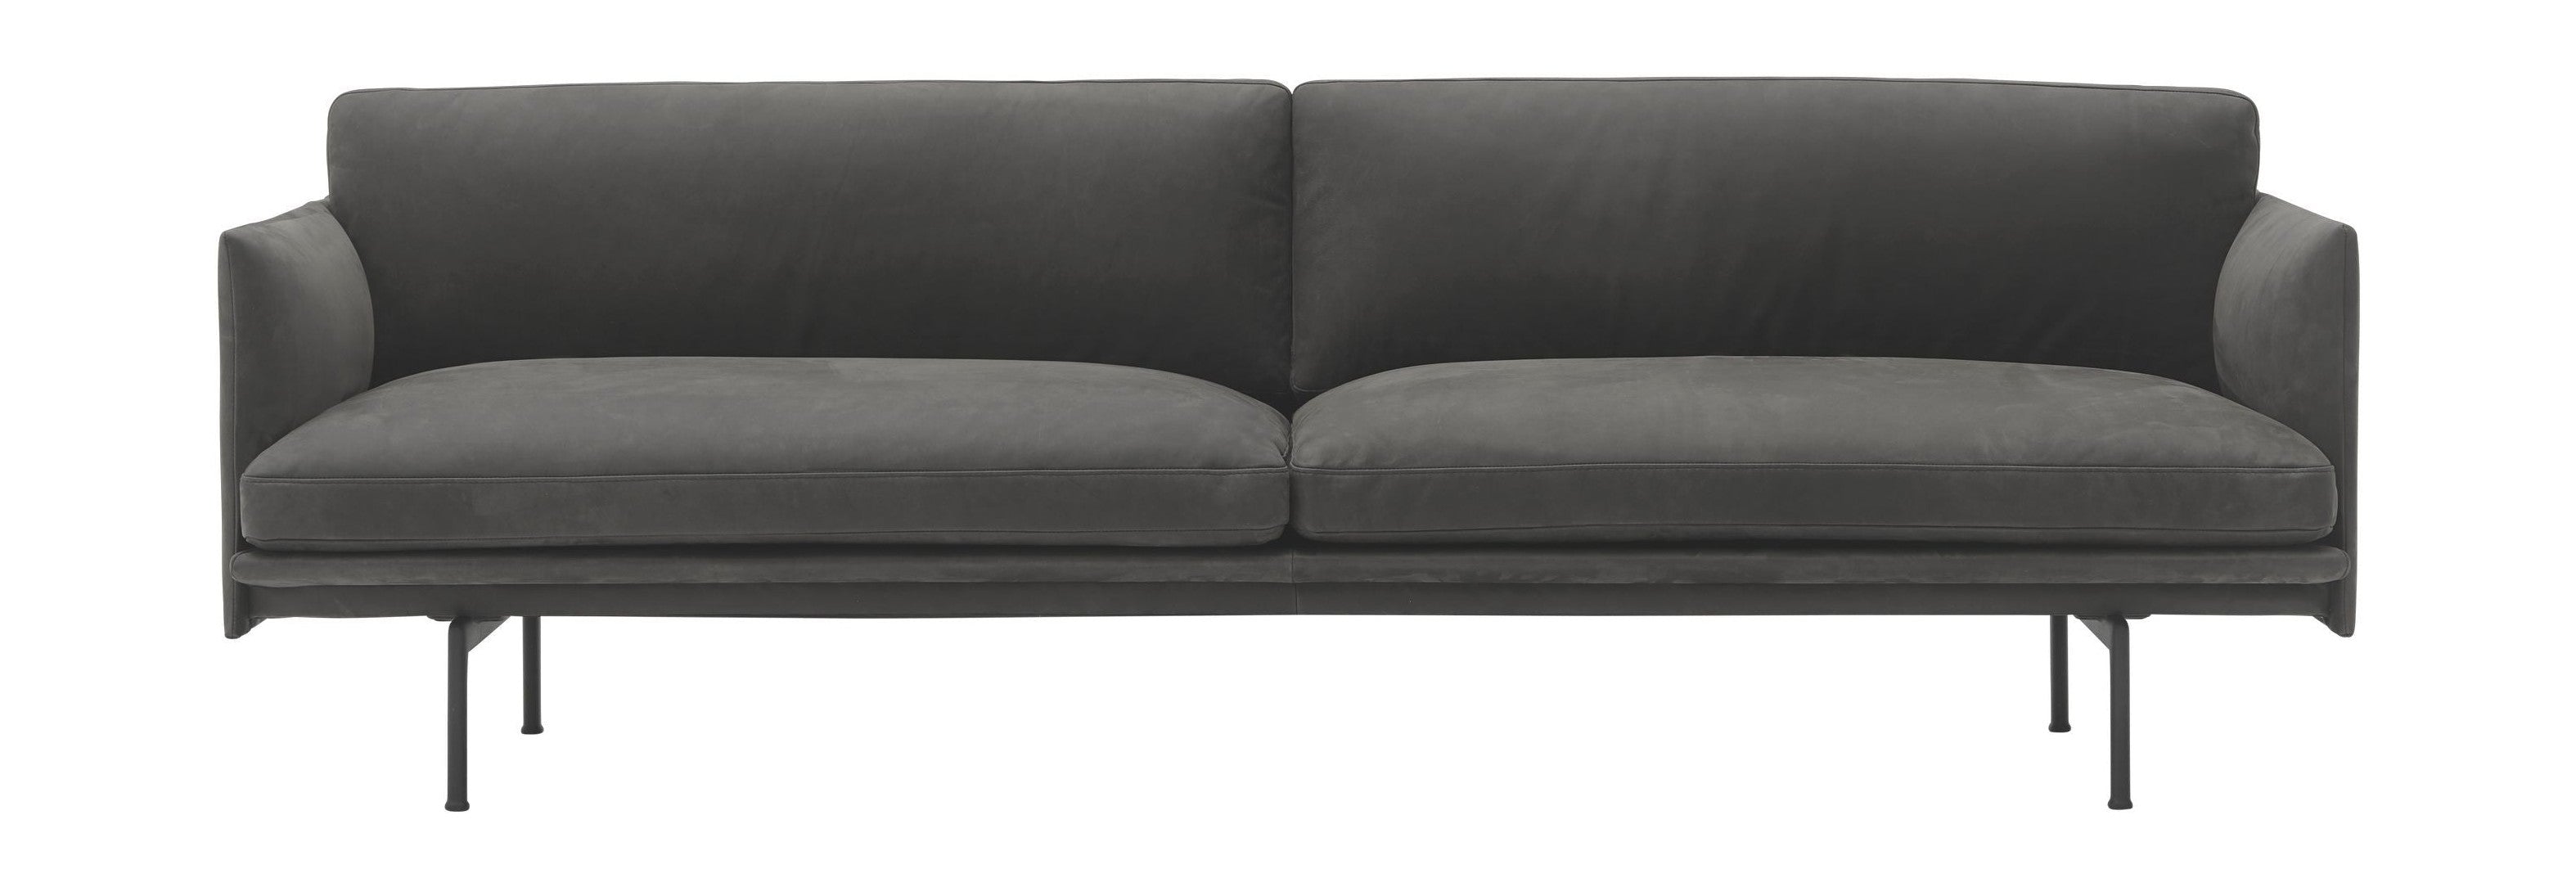 Muuto Outline sofá 3 plazas gracia de cuero, gris/negro